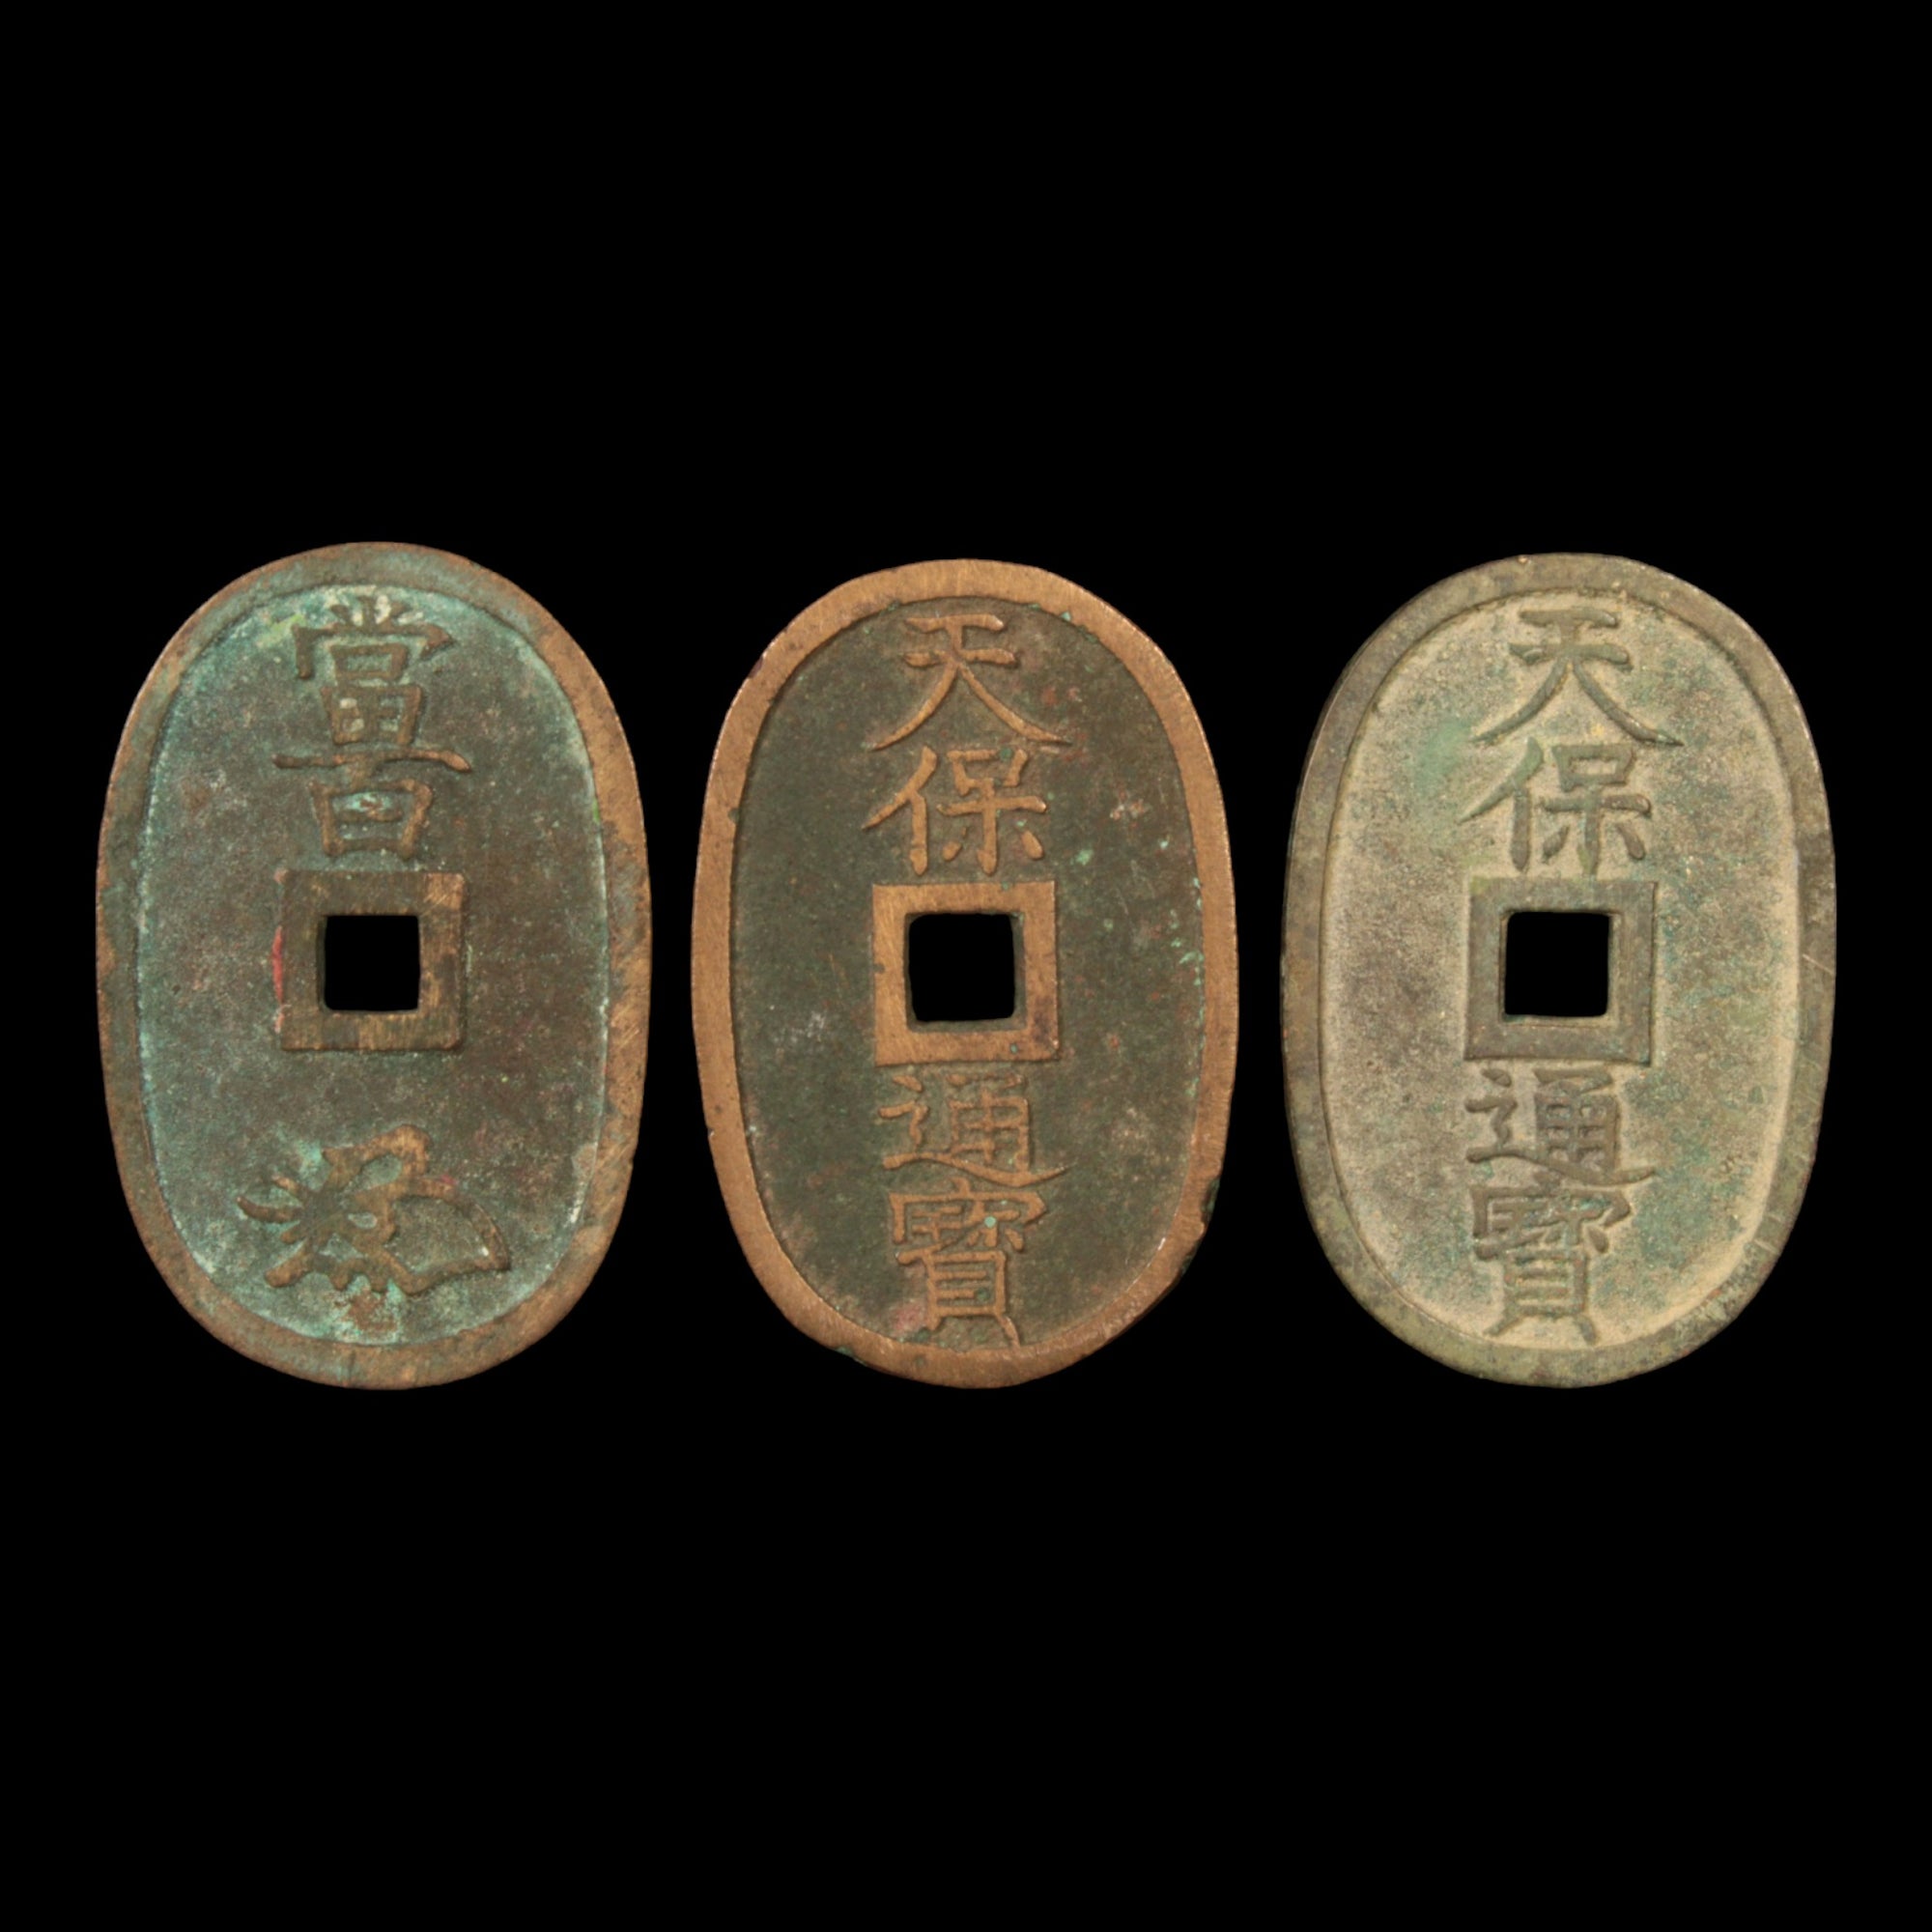 Lot of 3: Japan, Tenpo Tsuho (100 mon), Low Grade - c. 1860 - Edo Period